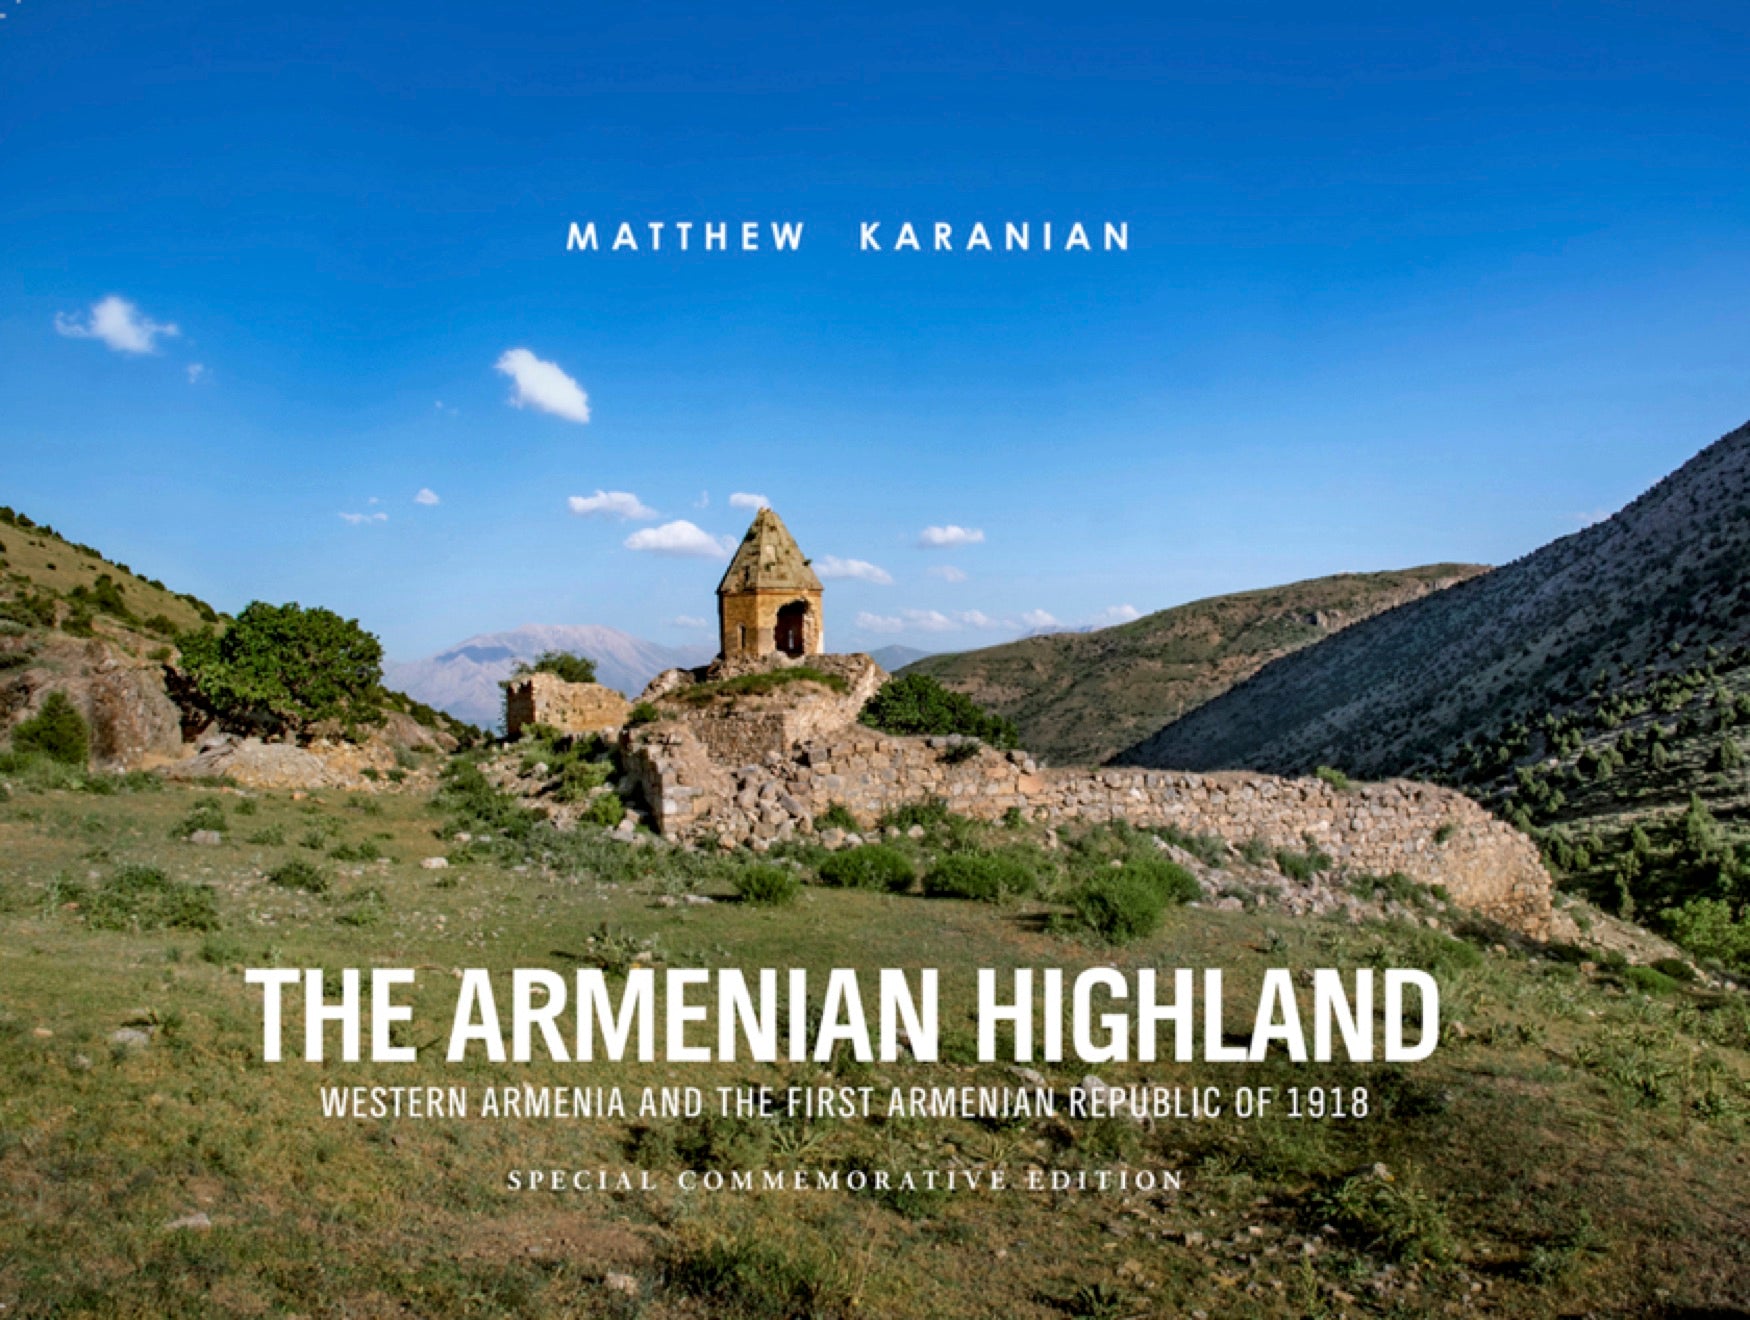 ARMENIAN HIGHLAND: Western Armenia and the First Armenian Republic of 1918